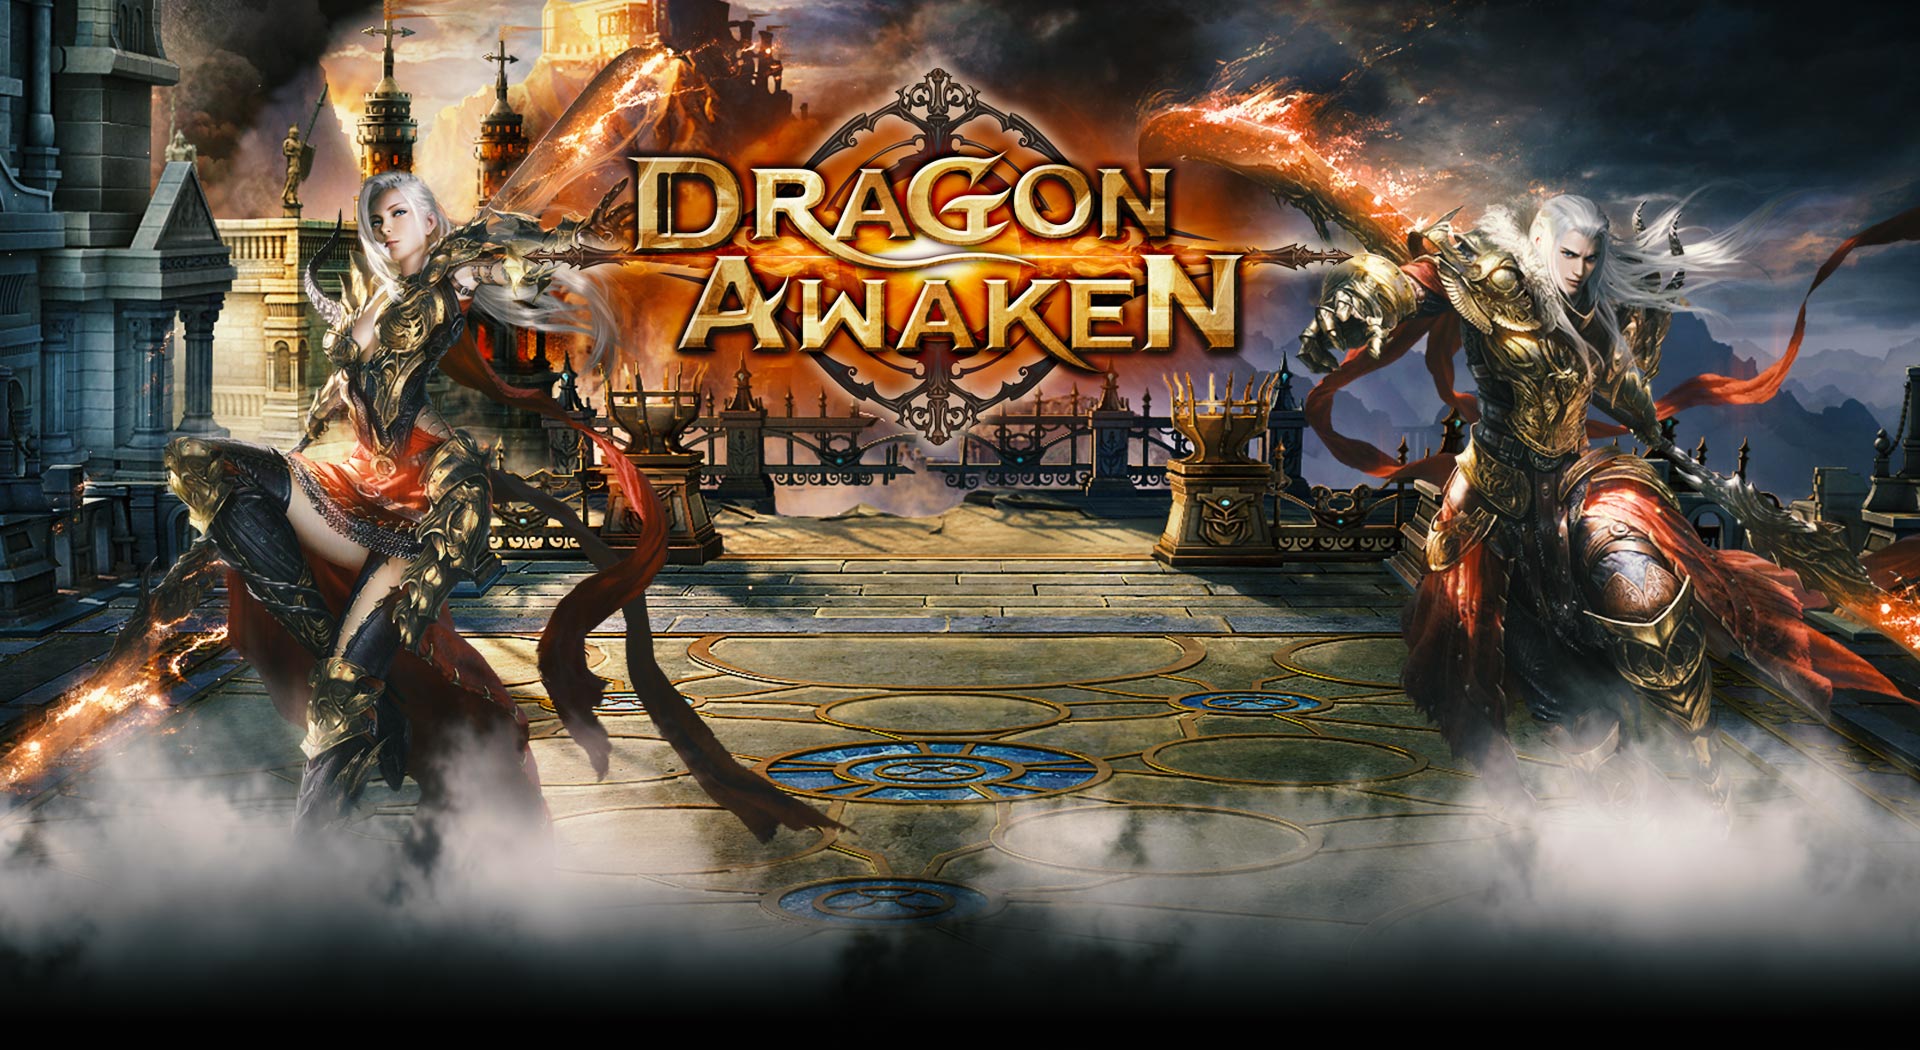 Dragon Awaken - Dragon Awaken Official Eu Website - Free Browser Online Game1920 x 1050